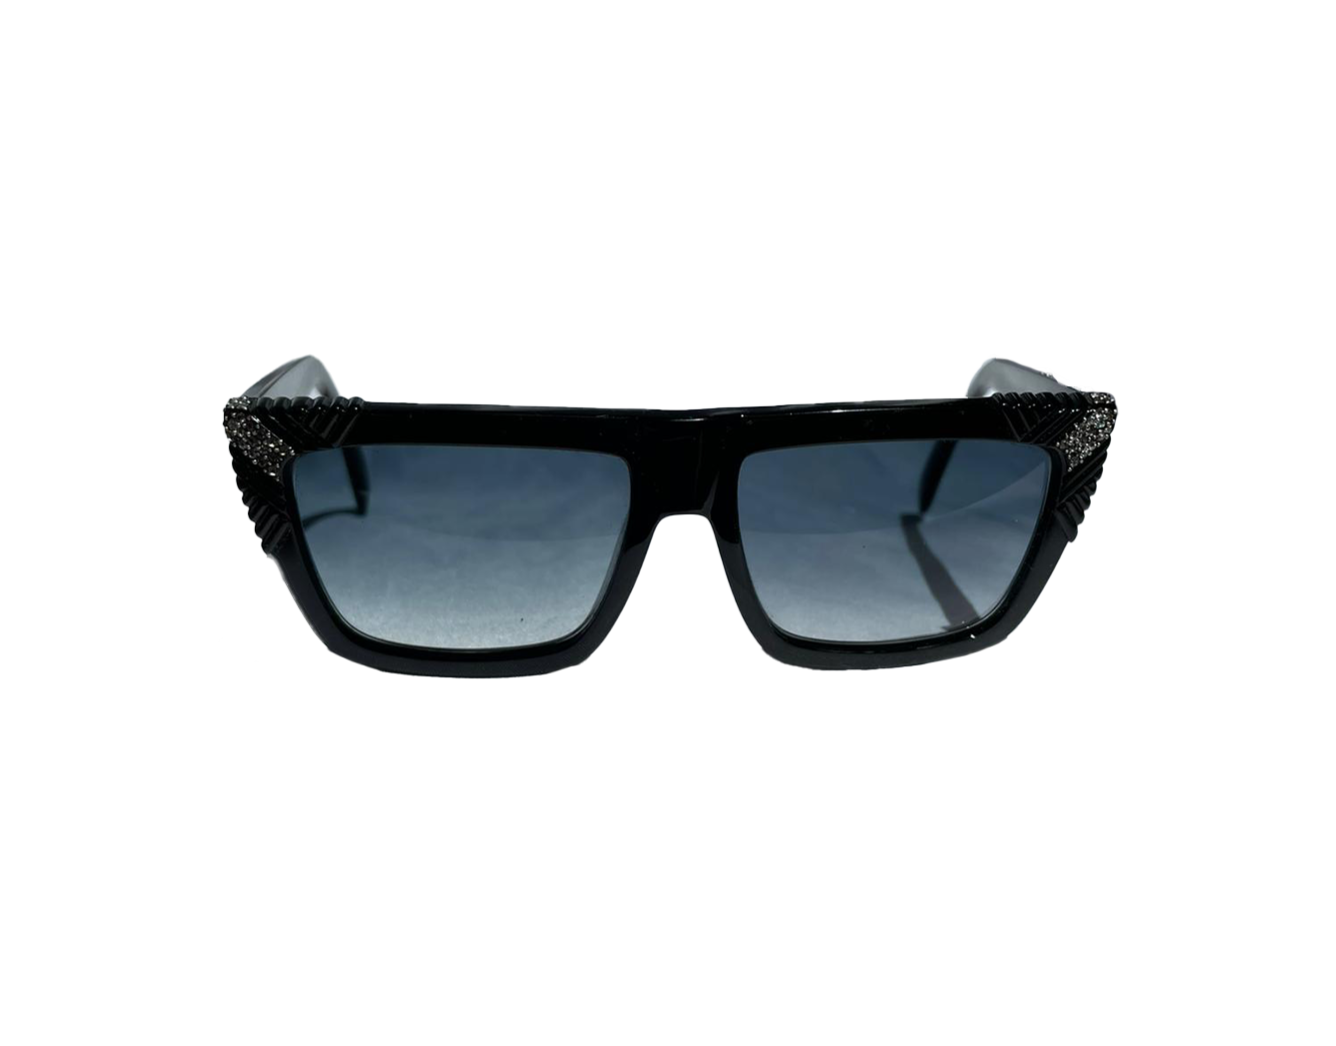 Gianni Versace 80s Black Square Sunglasses